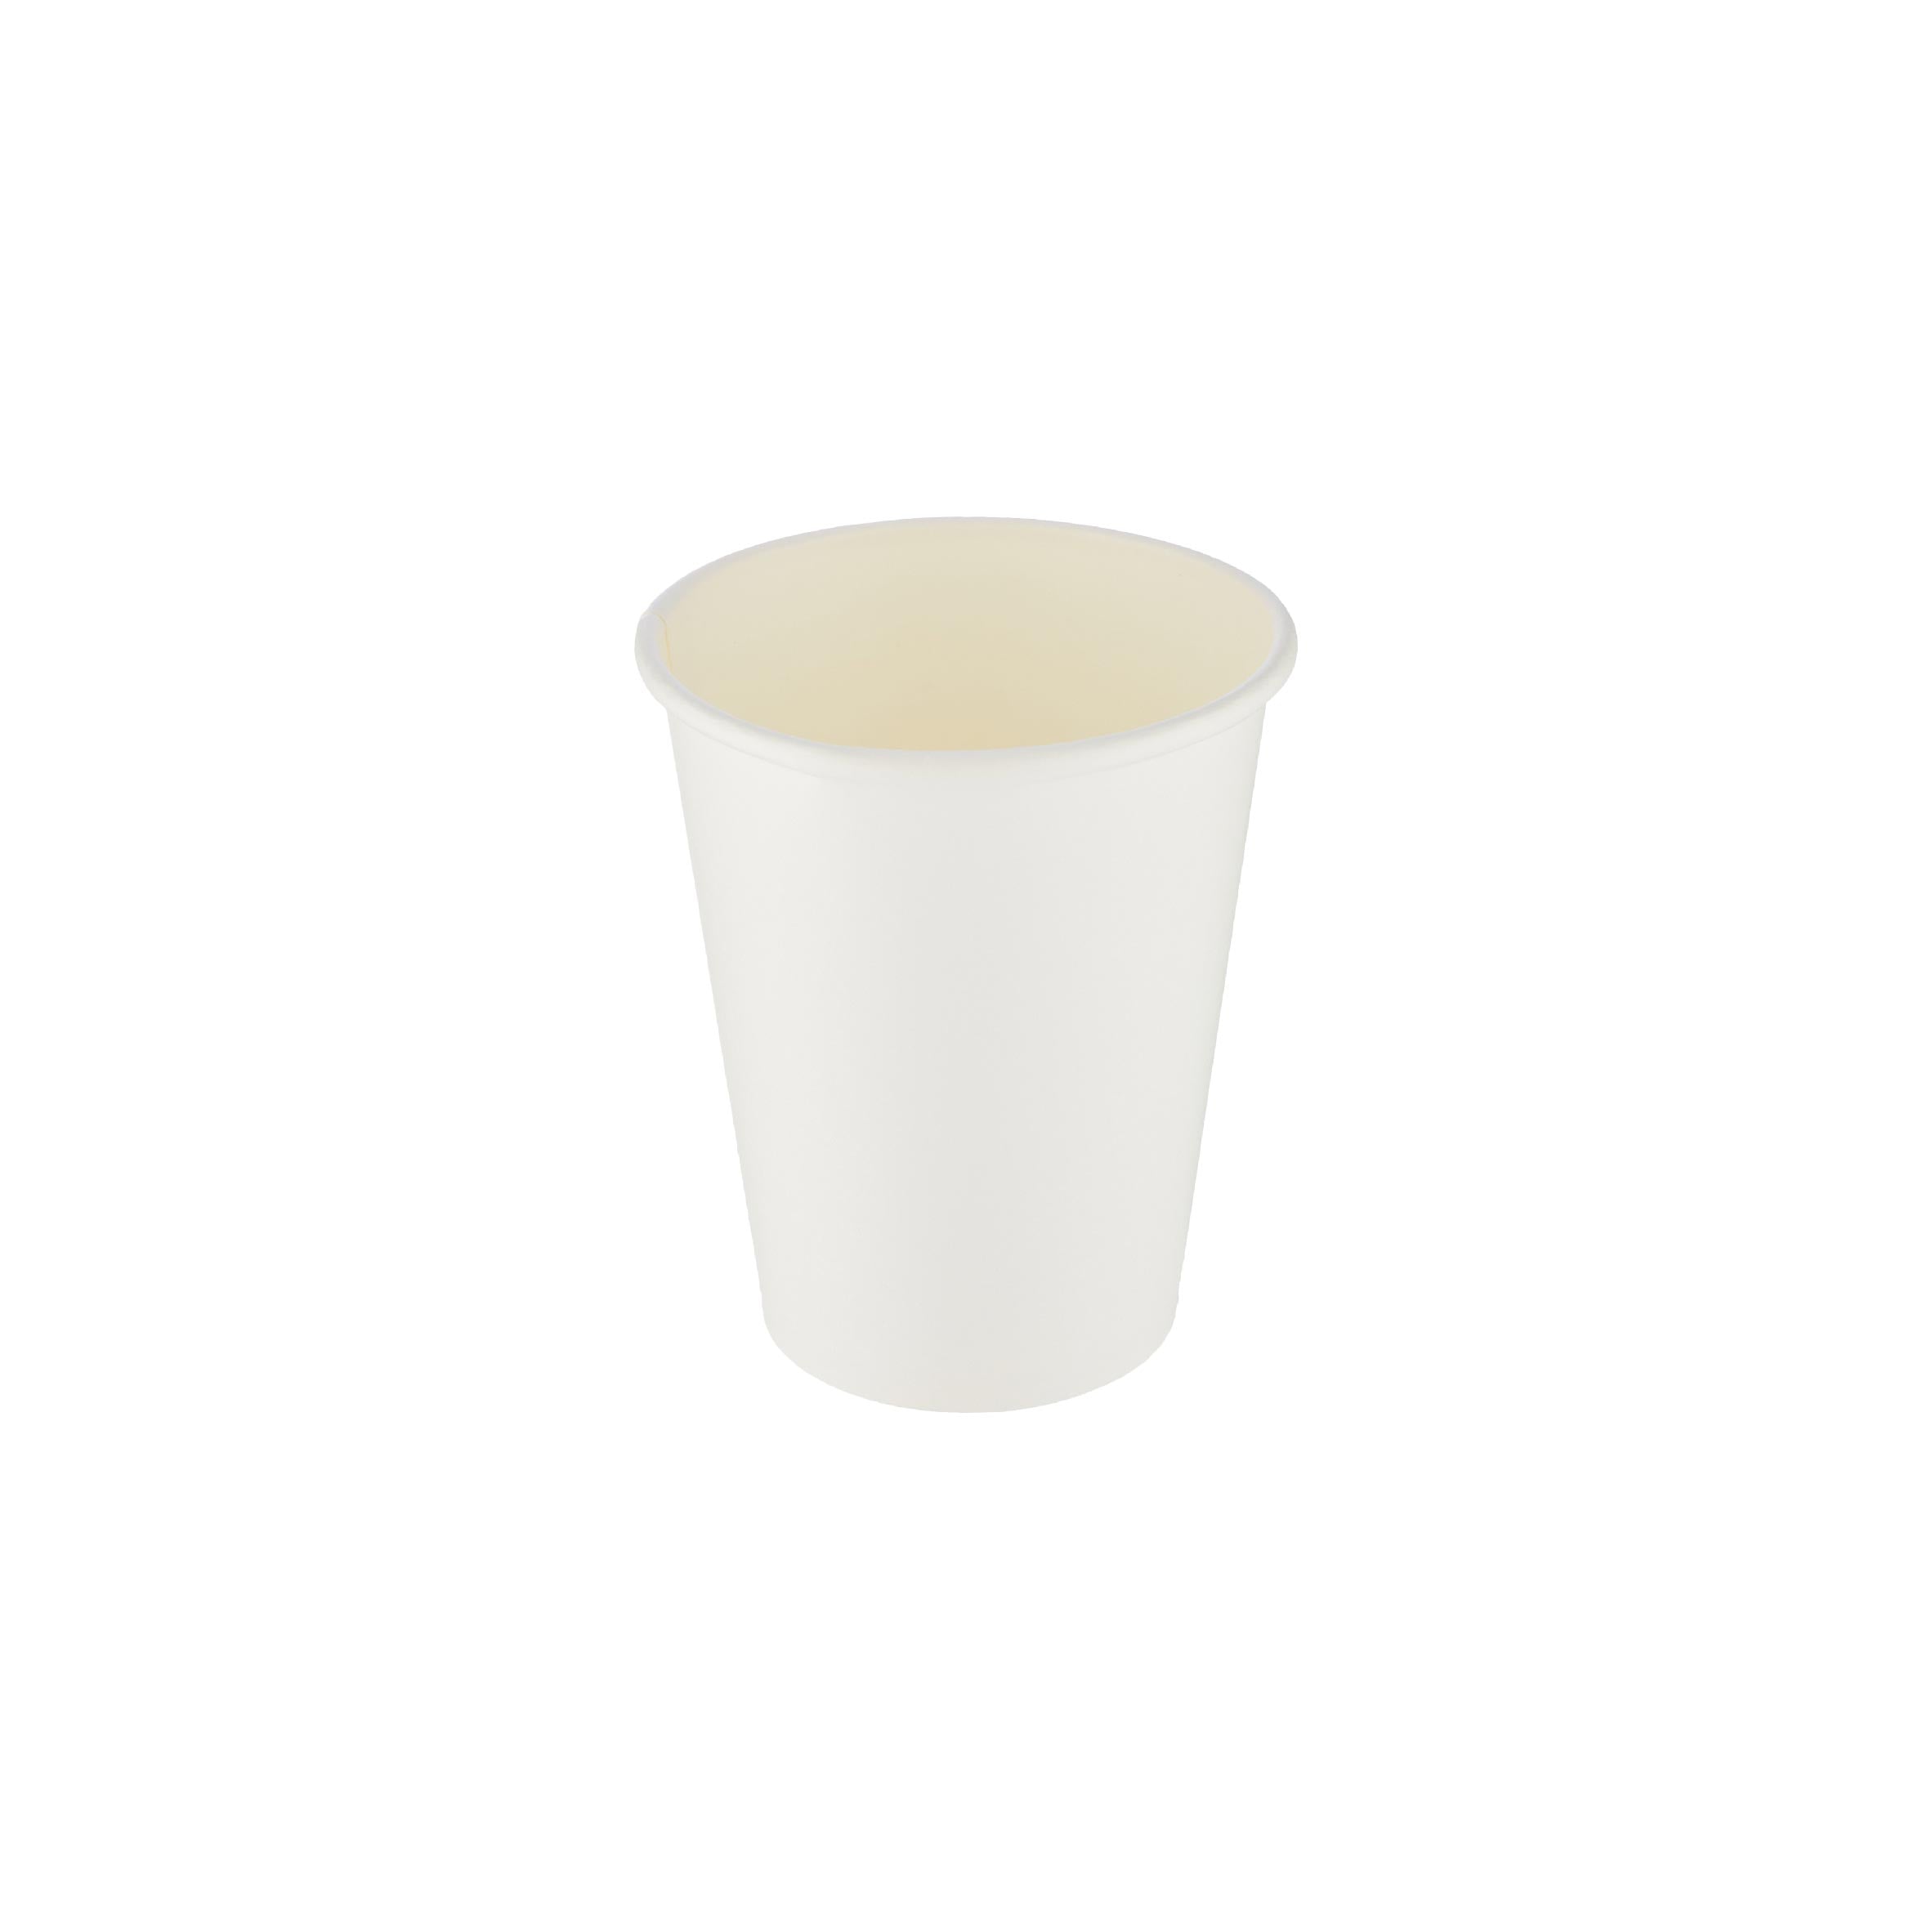 Plain/Printed Paper Cups (6.5 oz, 8 oz, 10 oz, 12 oz) - 50pcs